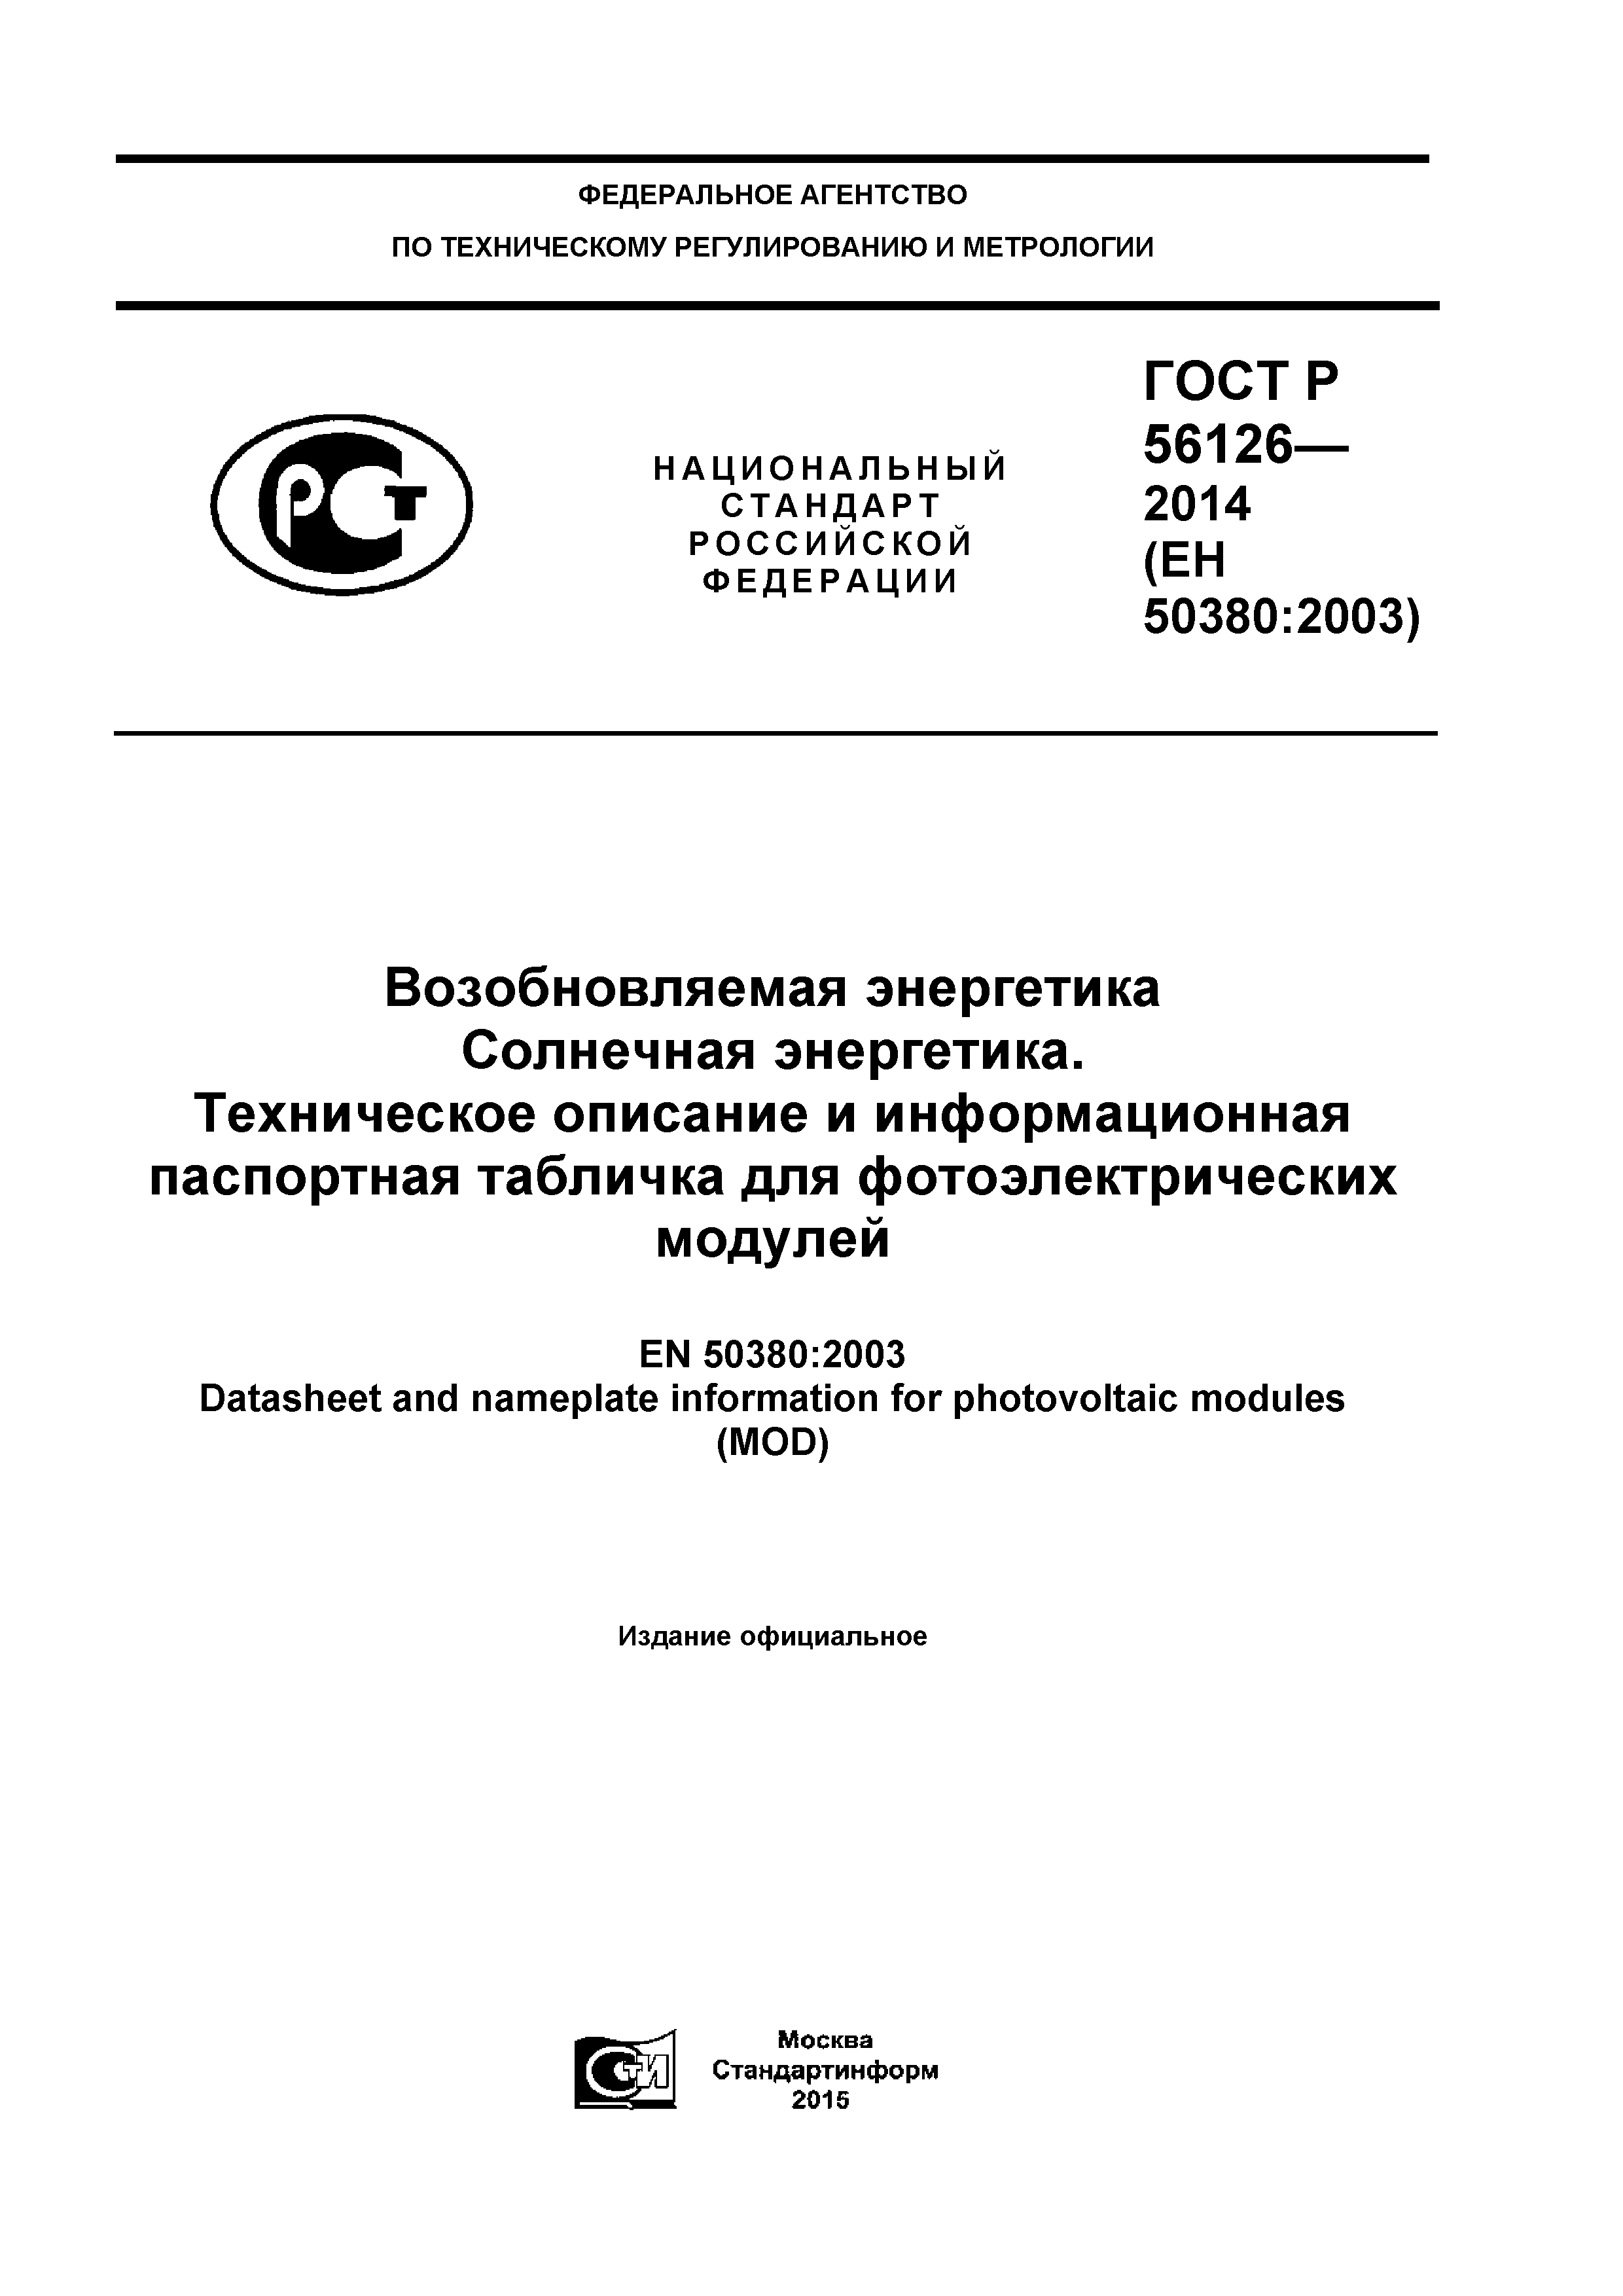 ГОСТ Р 56126-2014